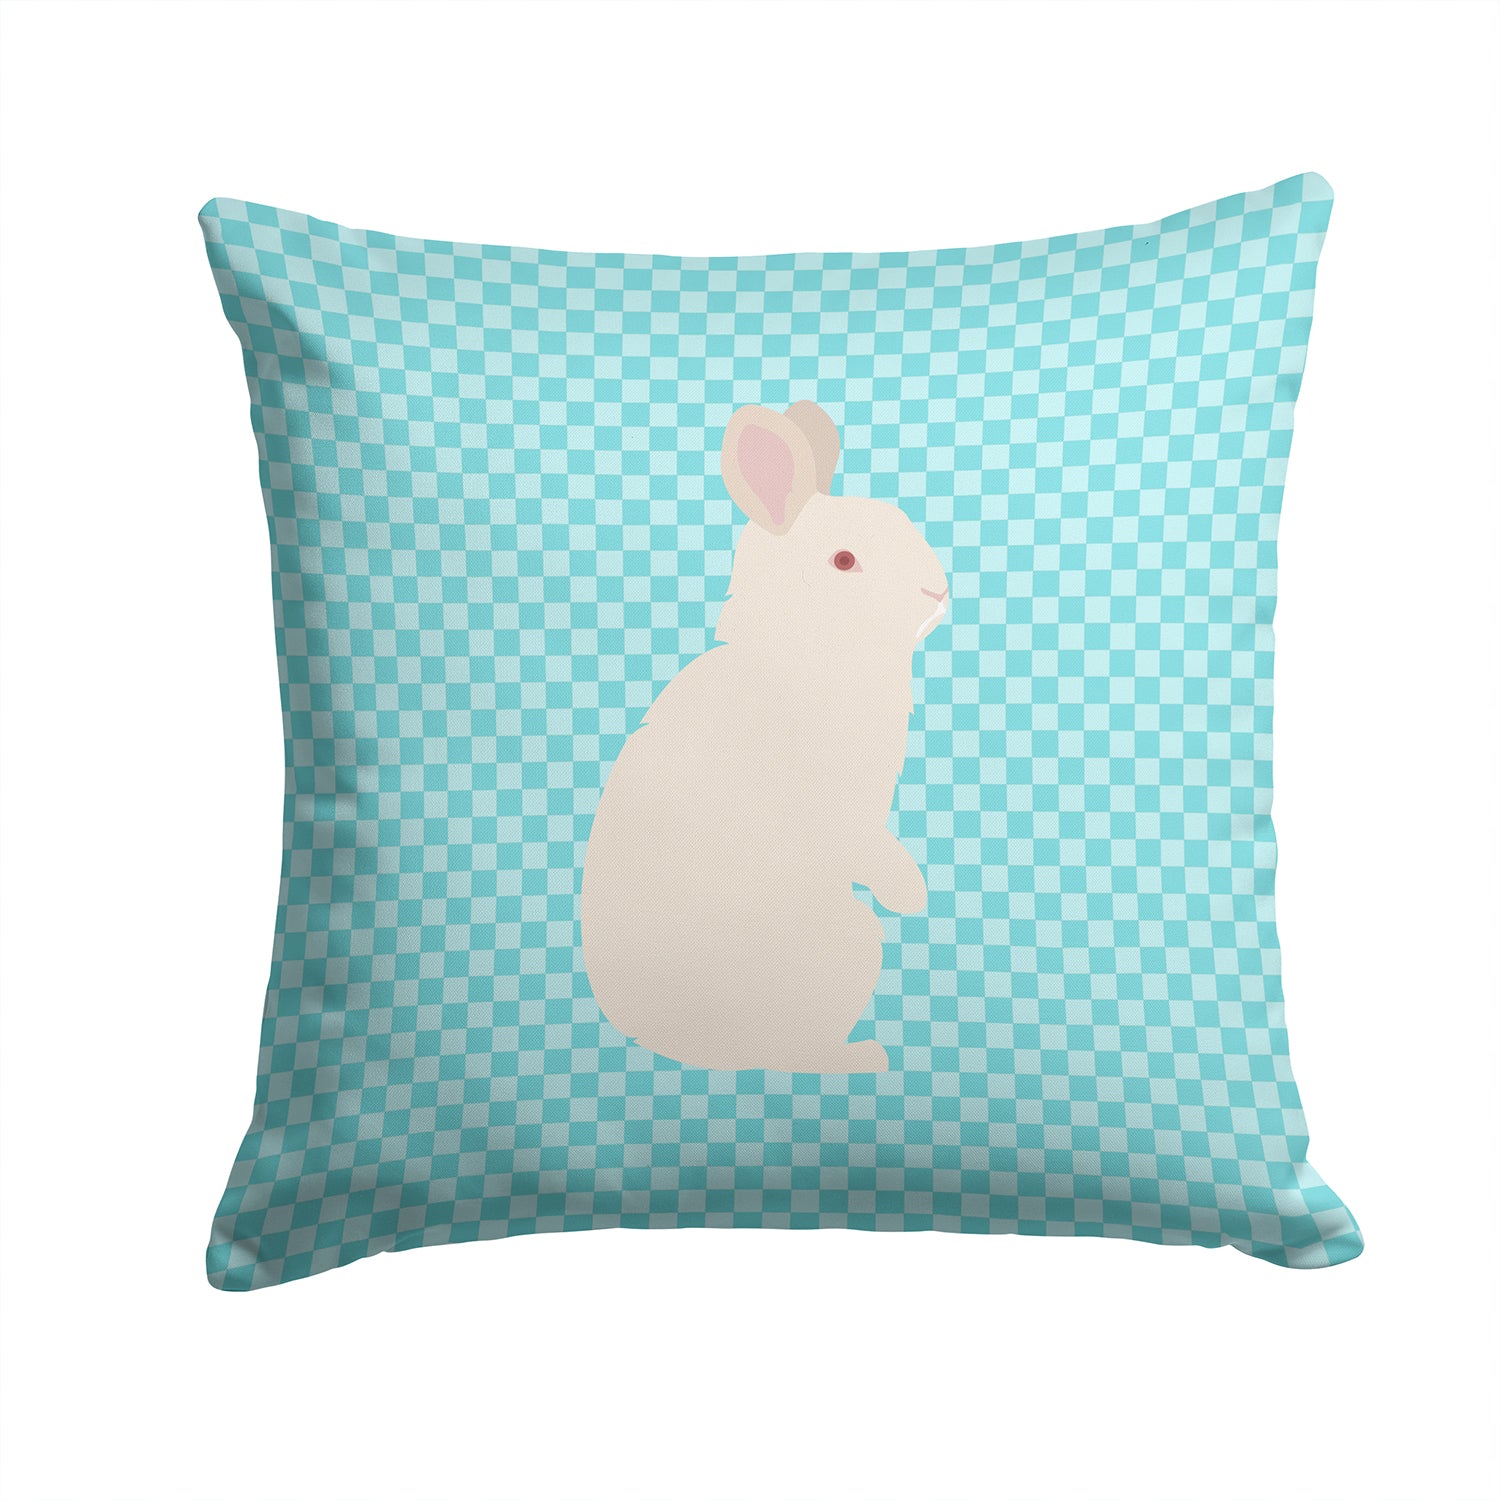 New Zealand White Rabbit Blue Check Fabric Decorative Pillow BB8139PW1414 - the-store.com